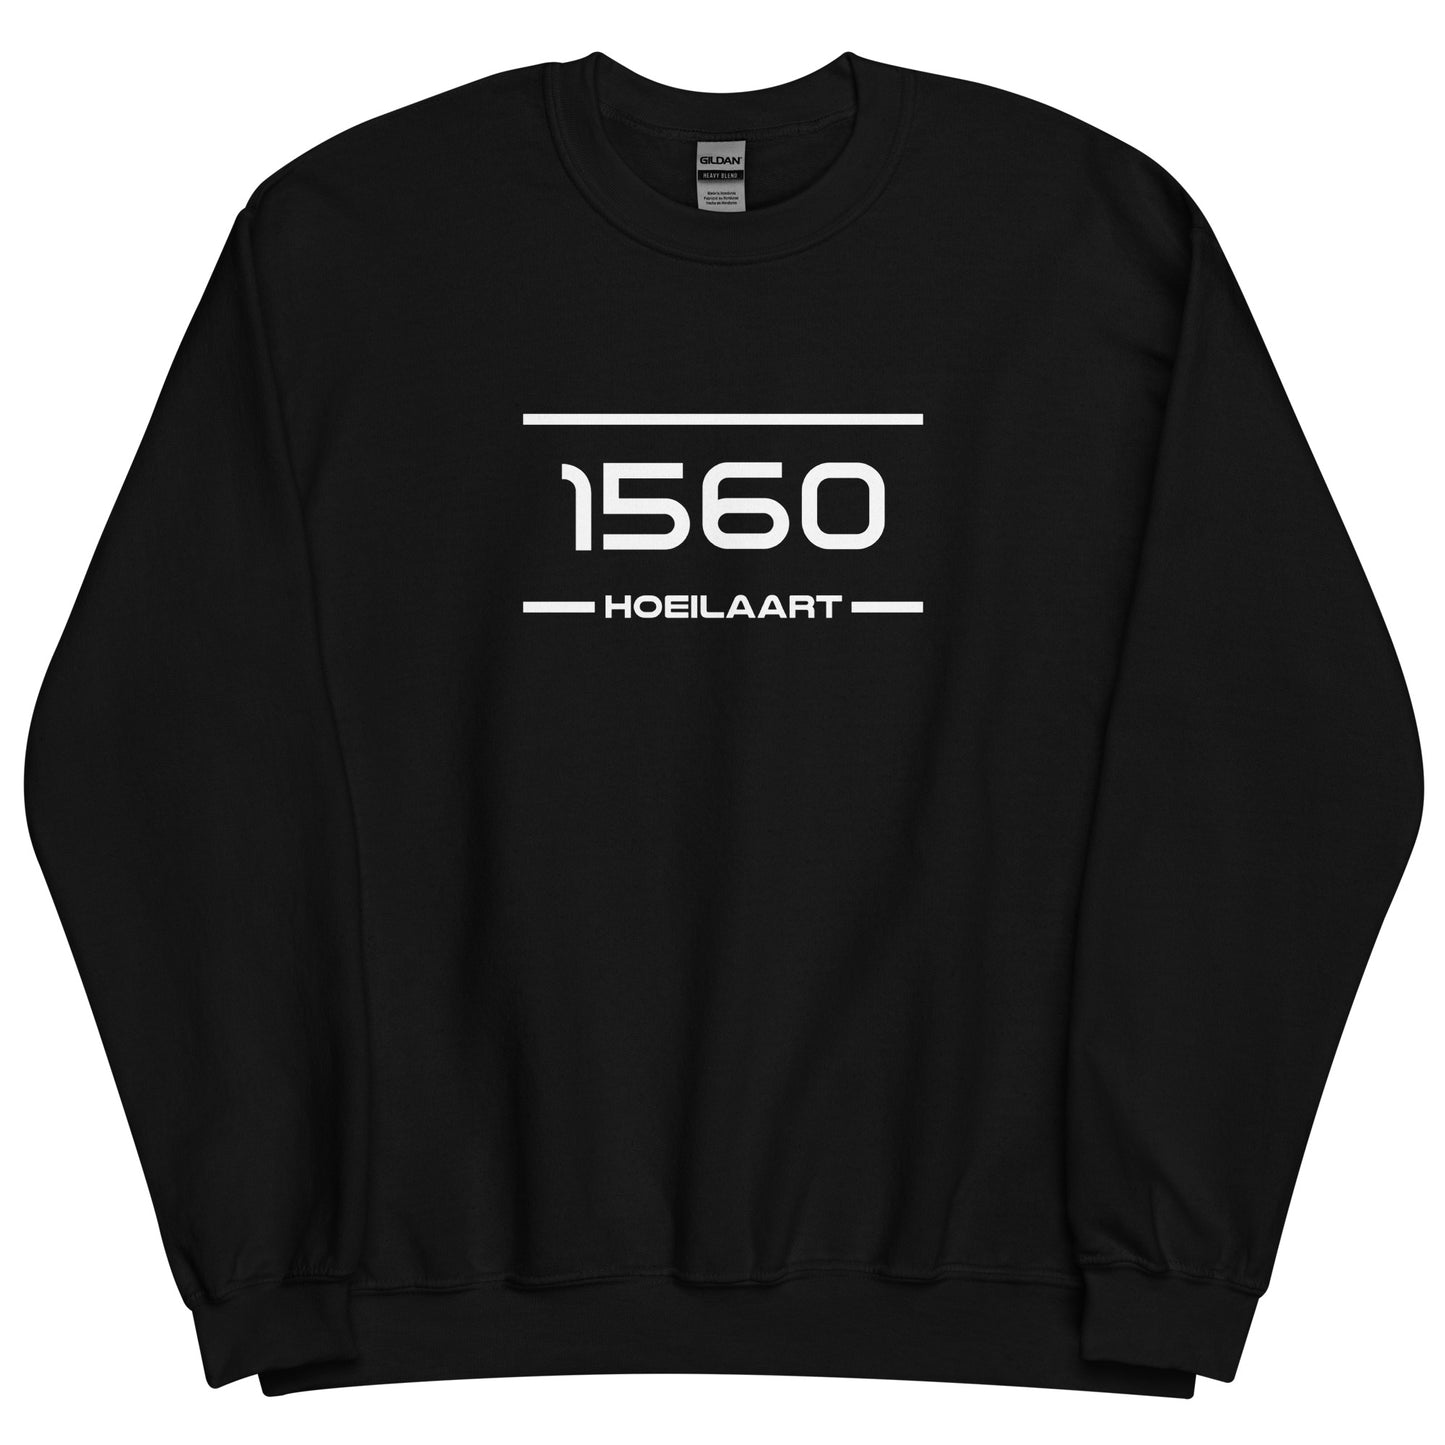 Sweater - 1560 - Hoeilaart (M/V)